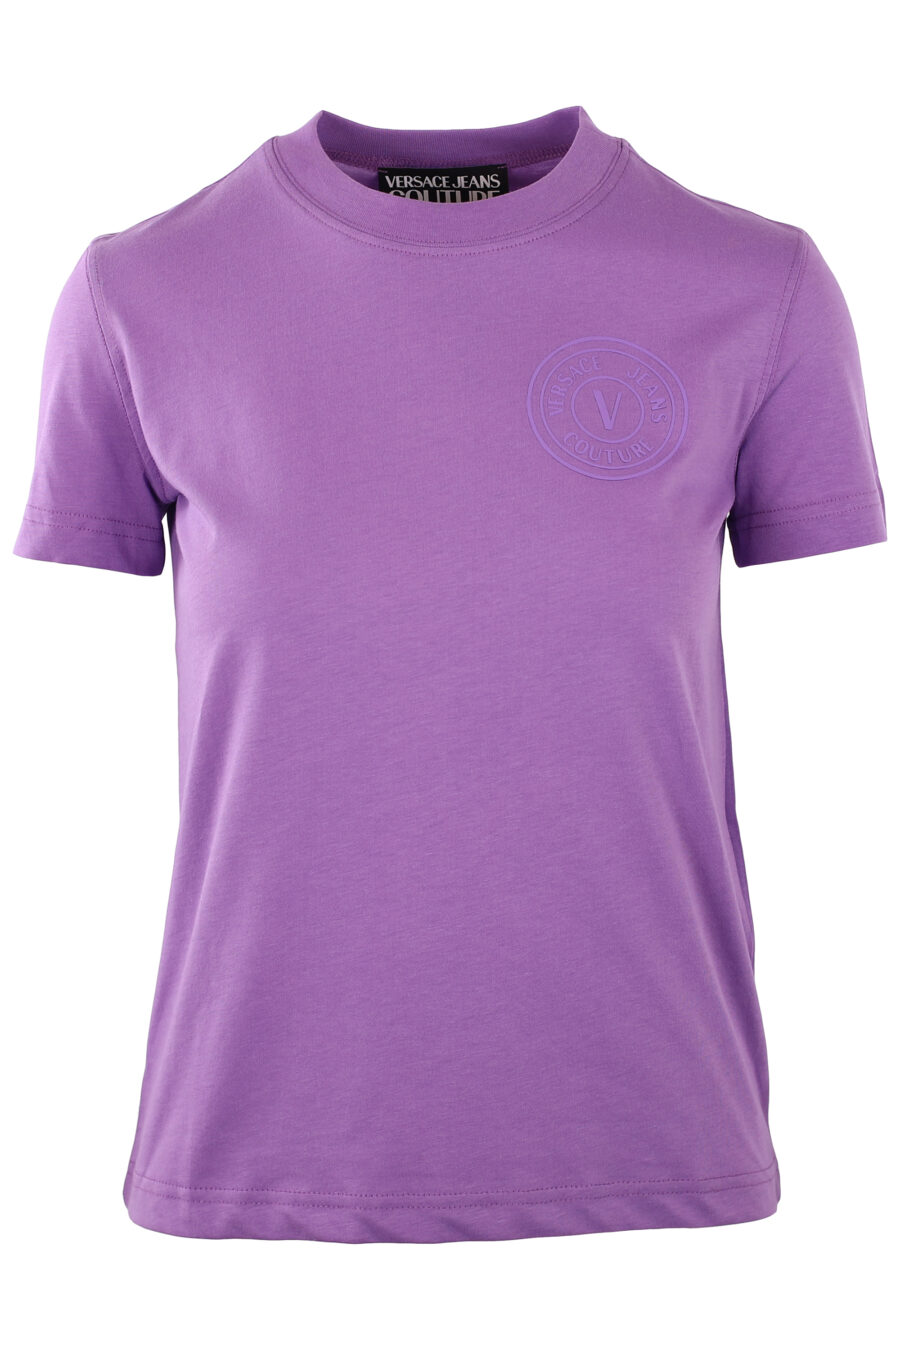 Lila T-Shirt mit einfarbigem, rundem Logo - IMG 0234